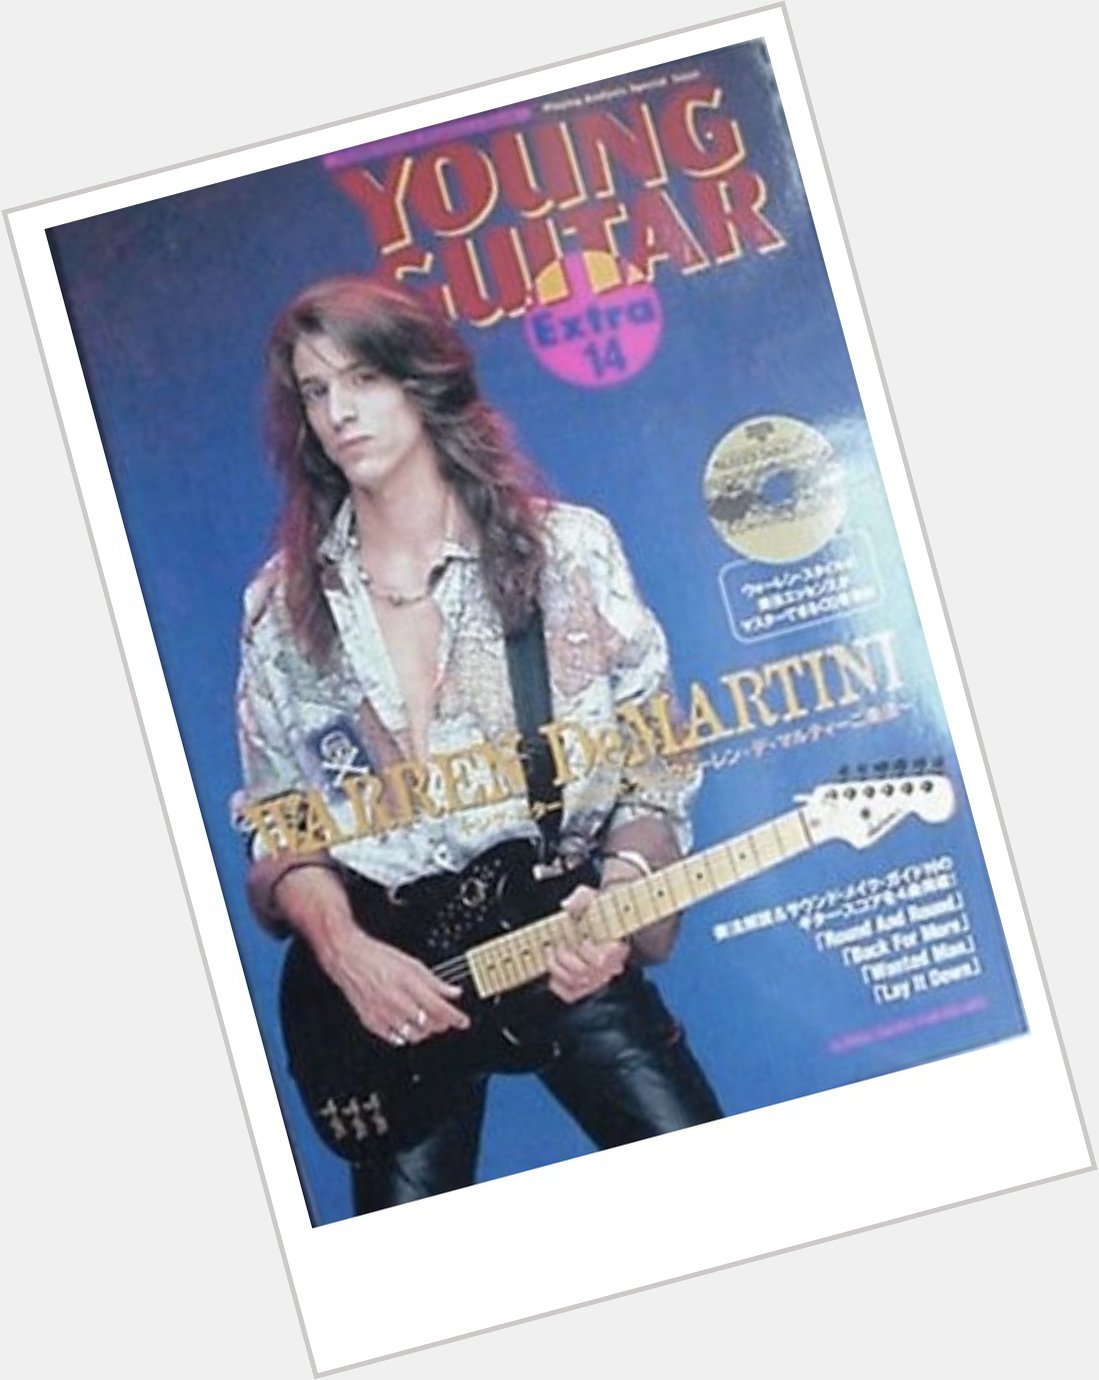  Happy Birthday Warren DeMartini Mr. King Of Guitar Tone 
Soldano SLO 100 s Rule !!! 